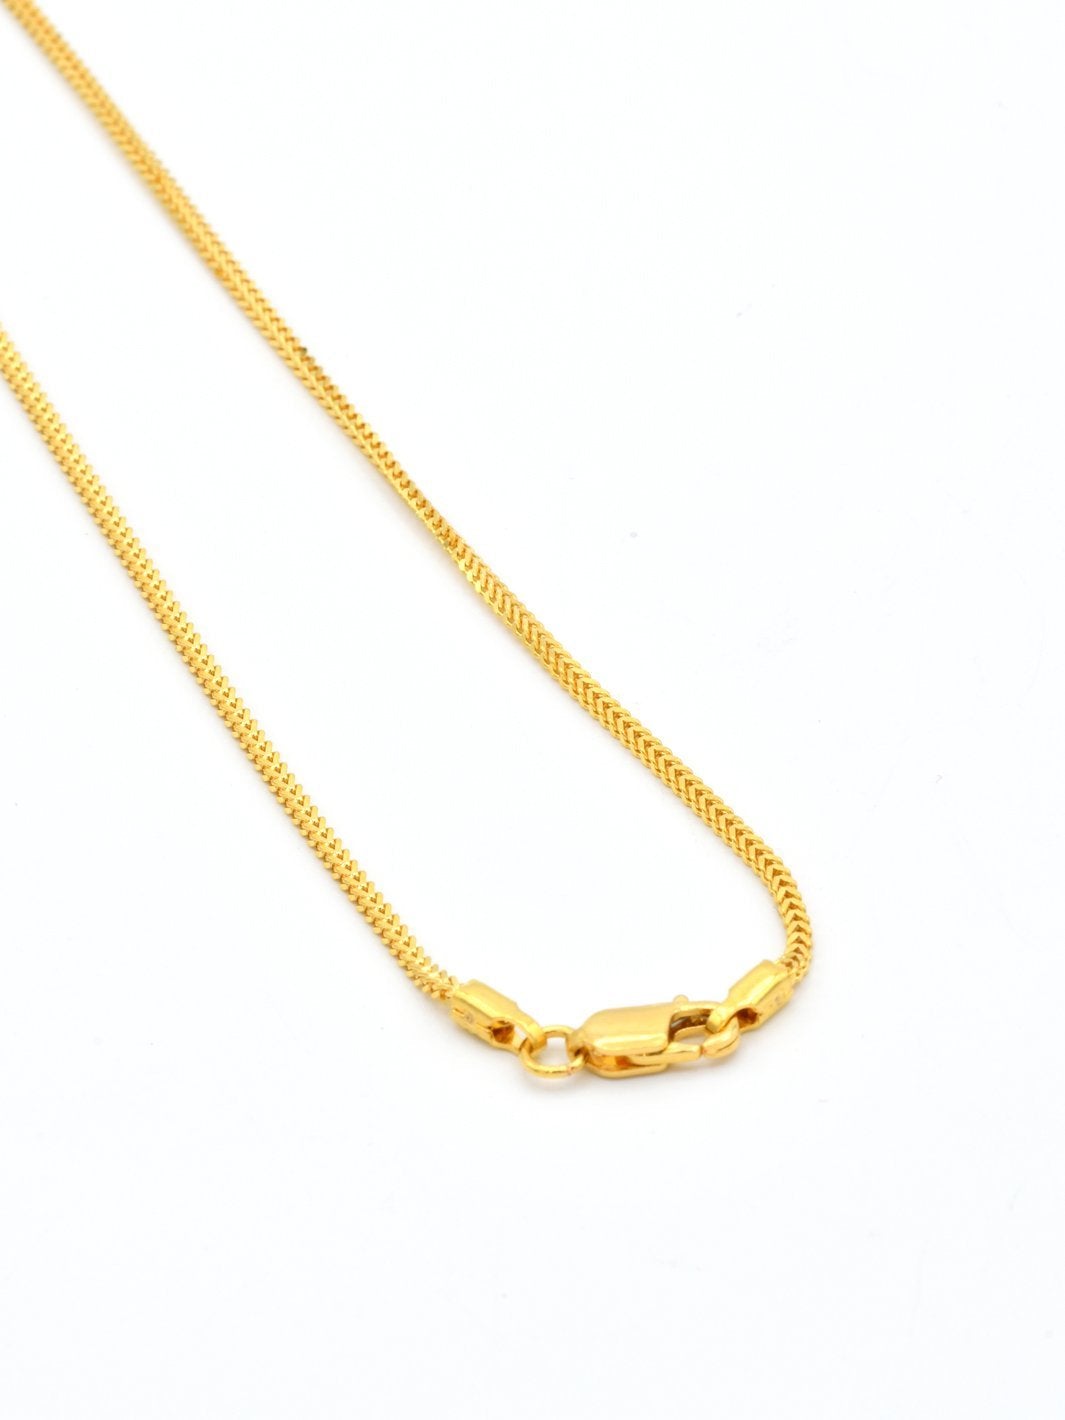 22ct Gold Fox Tail Chain - 45 cm - Roop Darshan